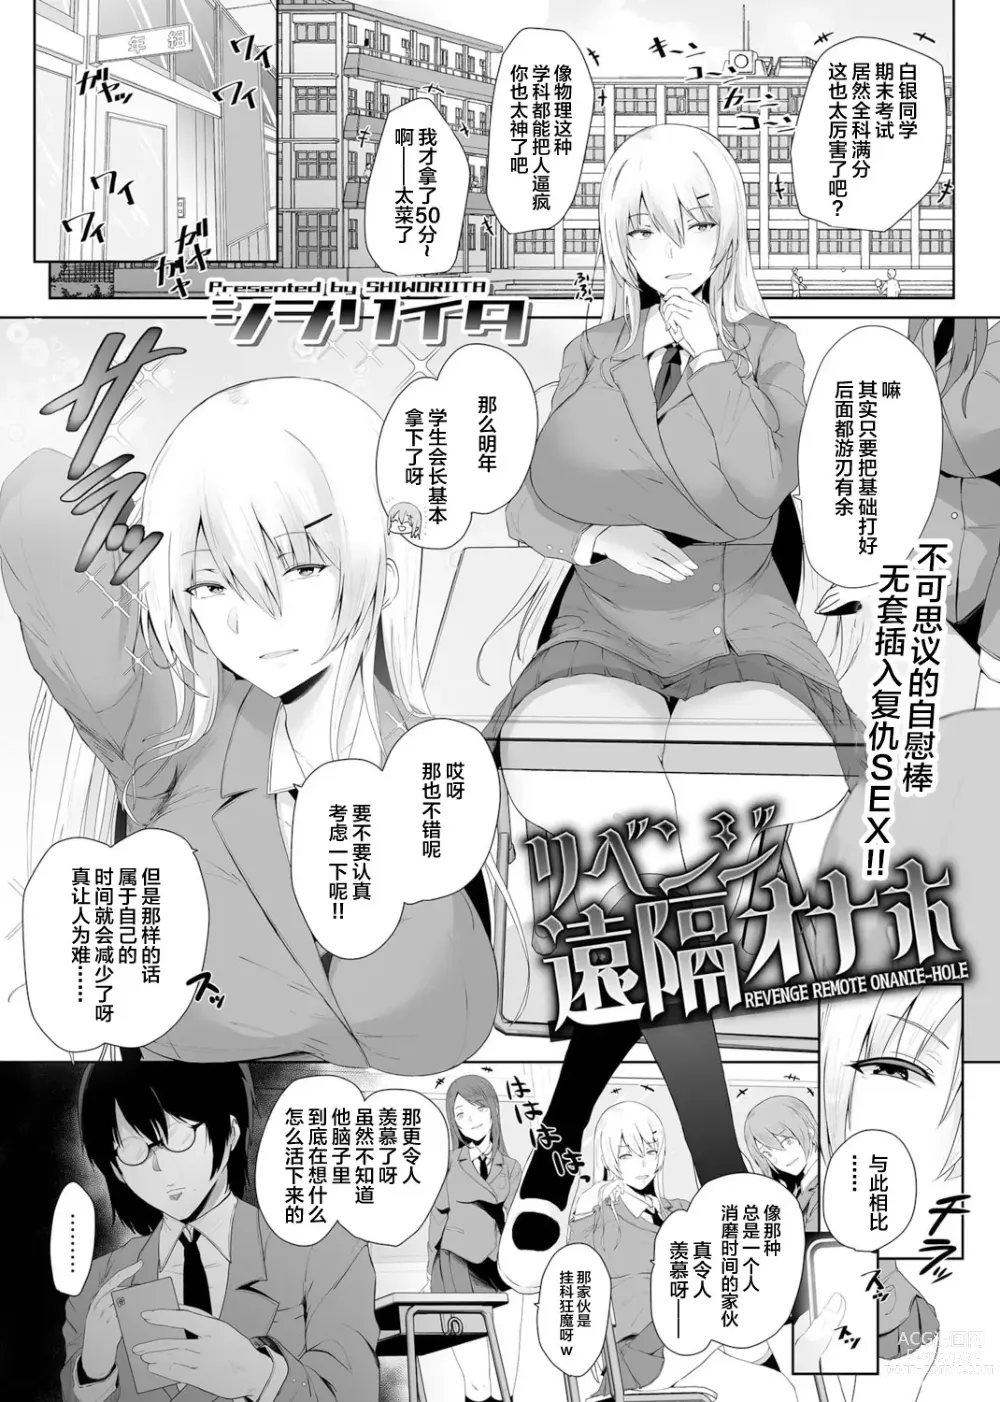 Page 3 of manga Revenge Enkaku Onaho